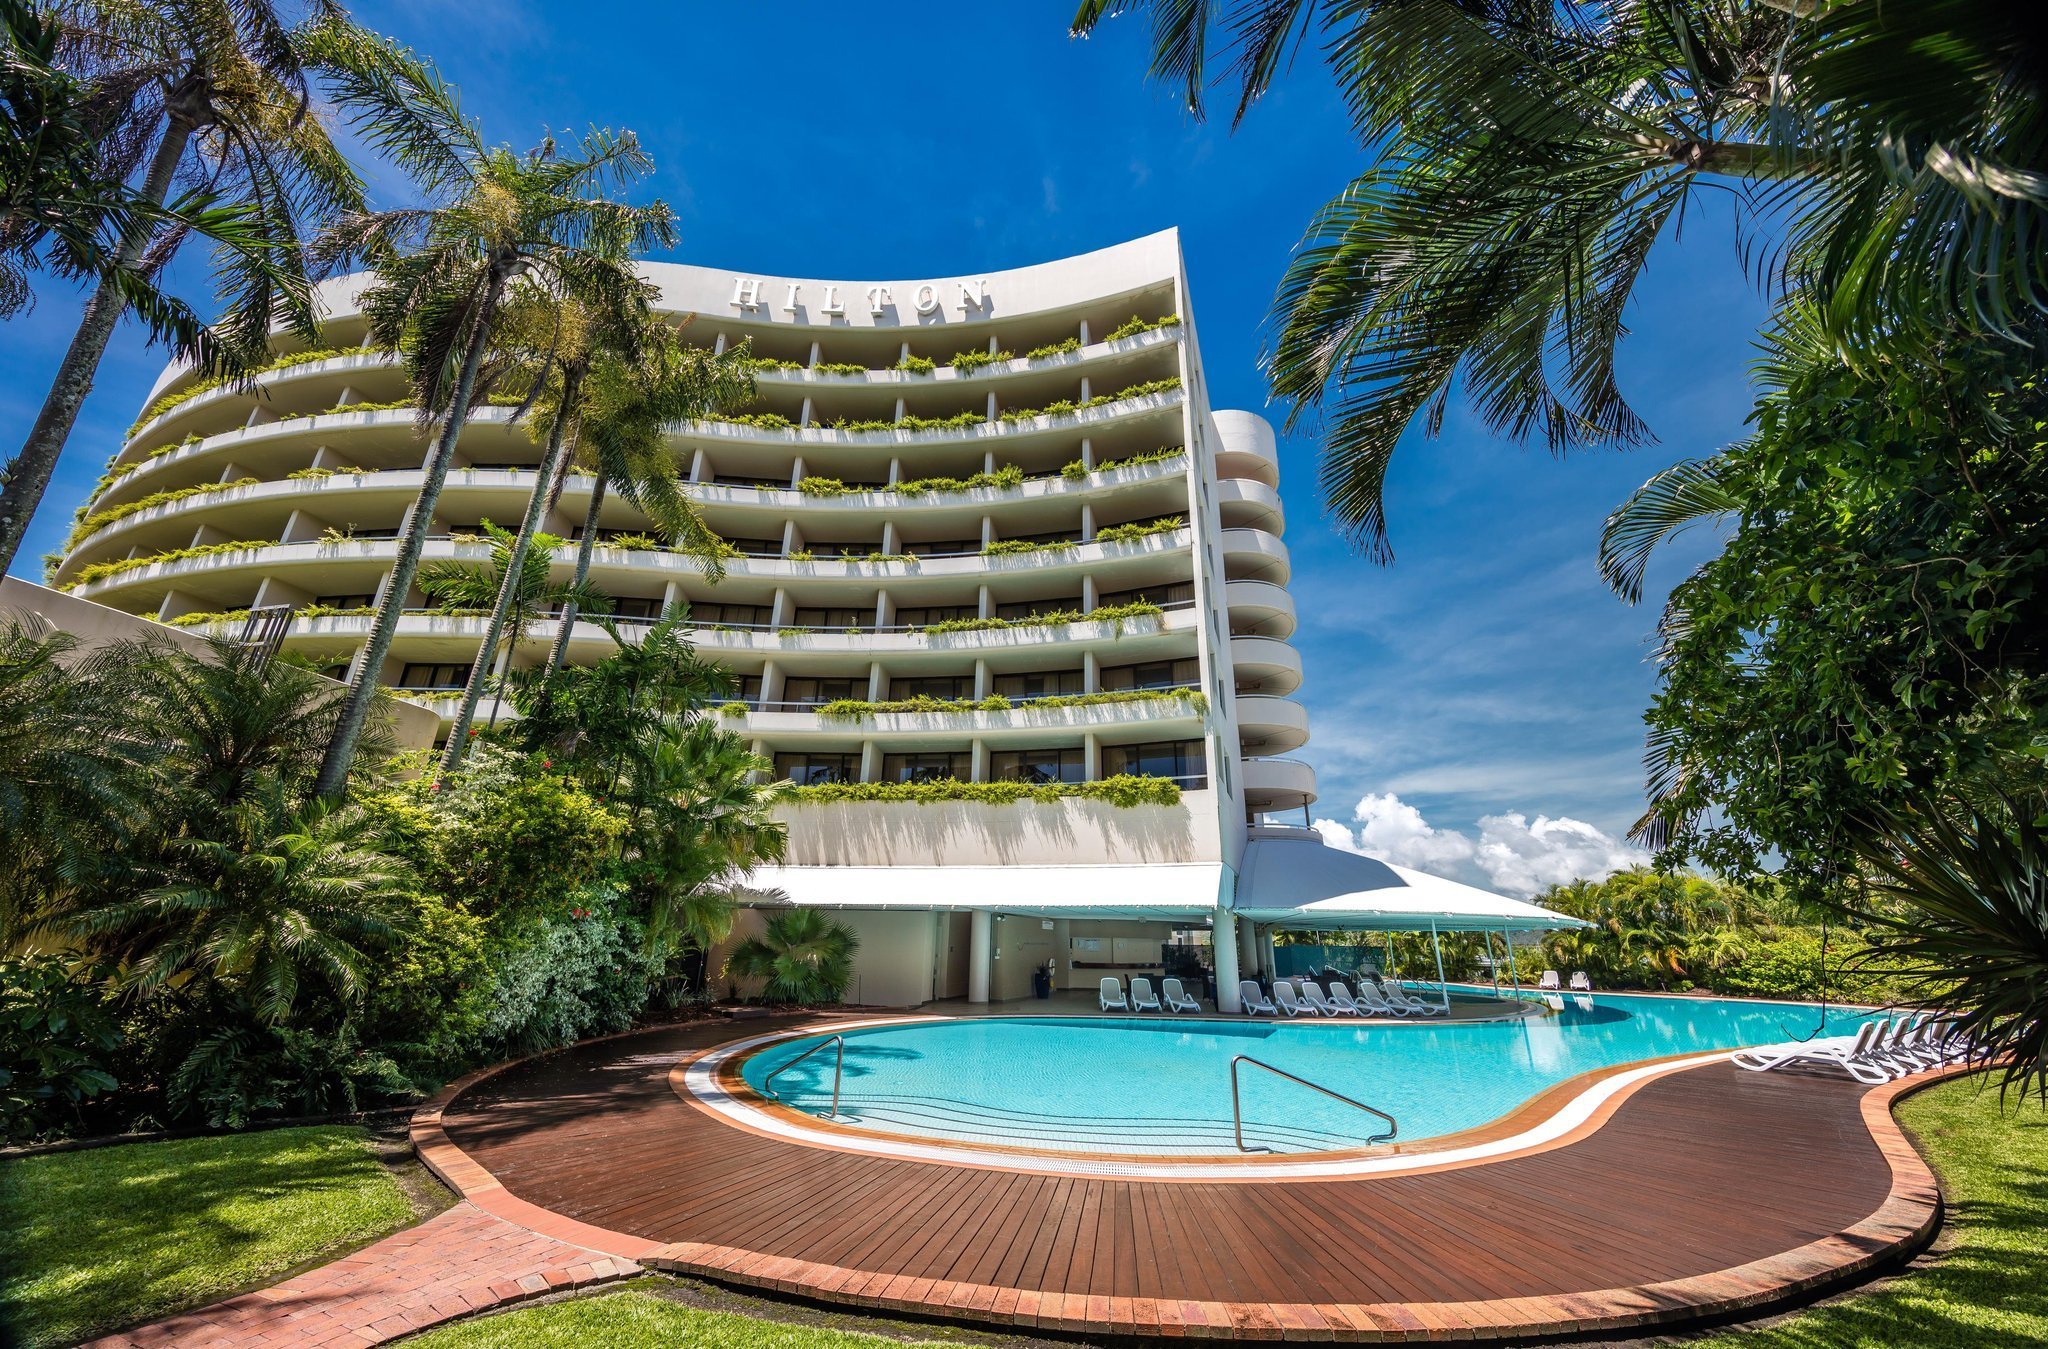 Photo of Hilton Cairns, Cairns, Queensland, Australia